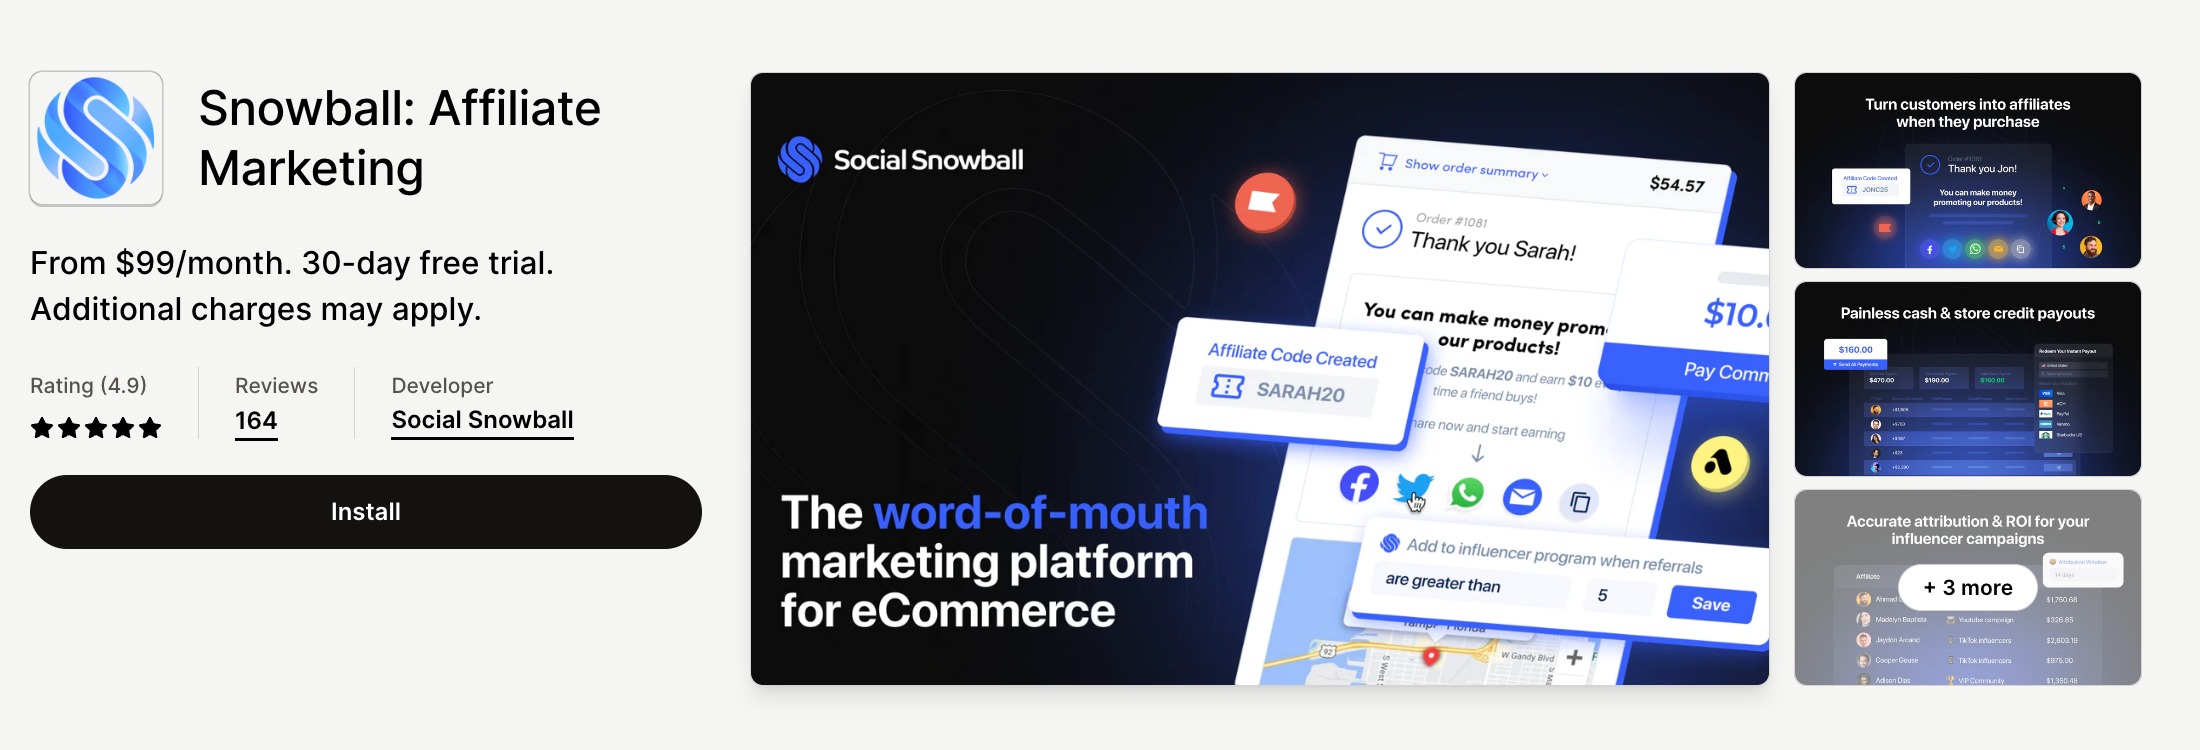 Snowball: Affiliate Marketing